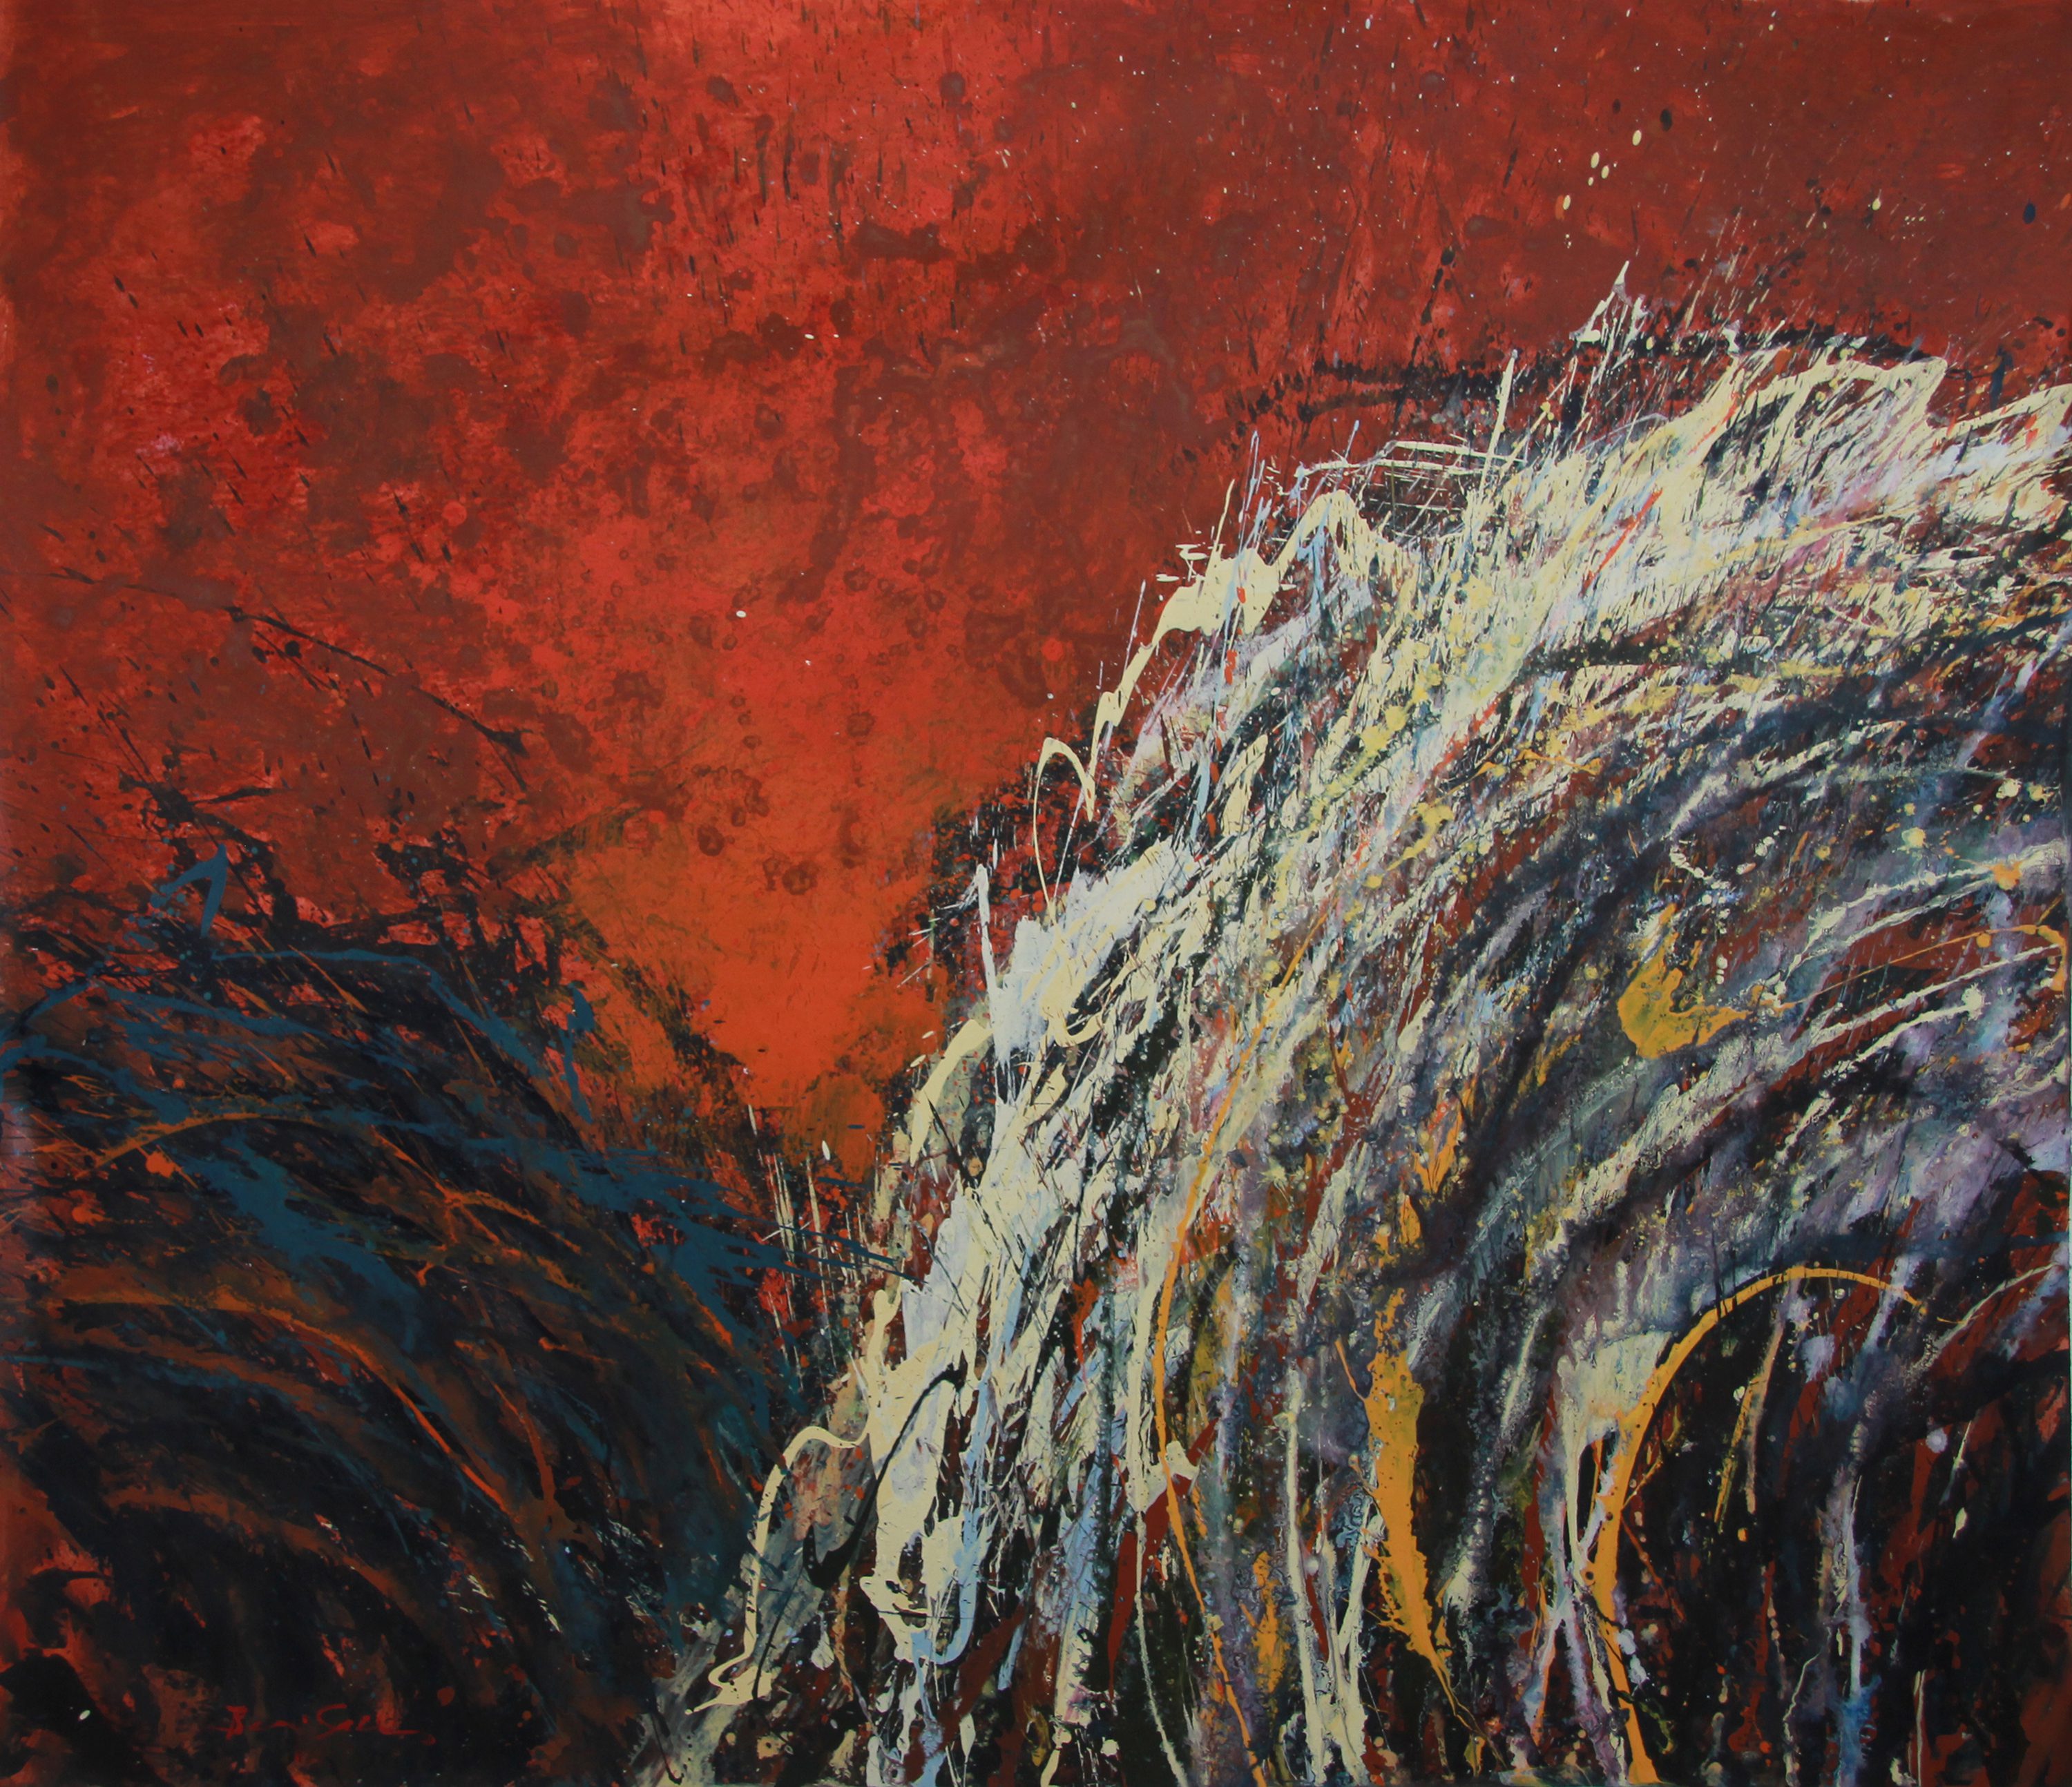 EXODUS: RED SEA, acrylic on canvas, 72"x86", 2014